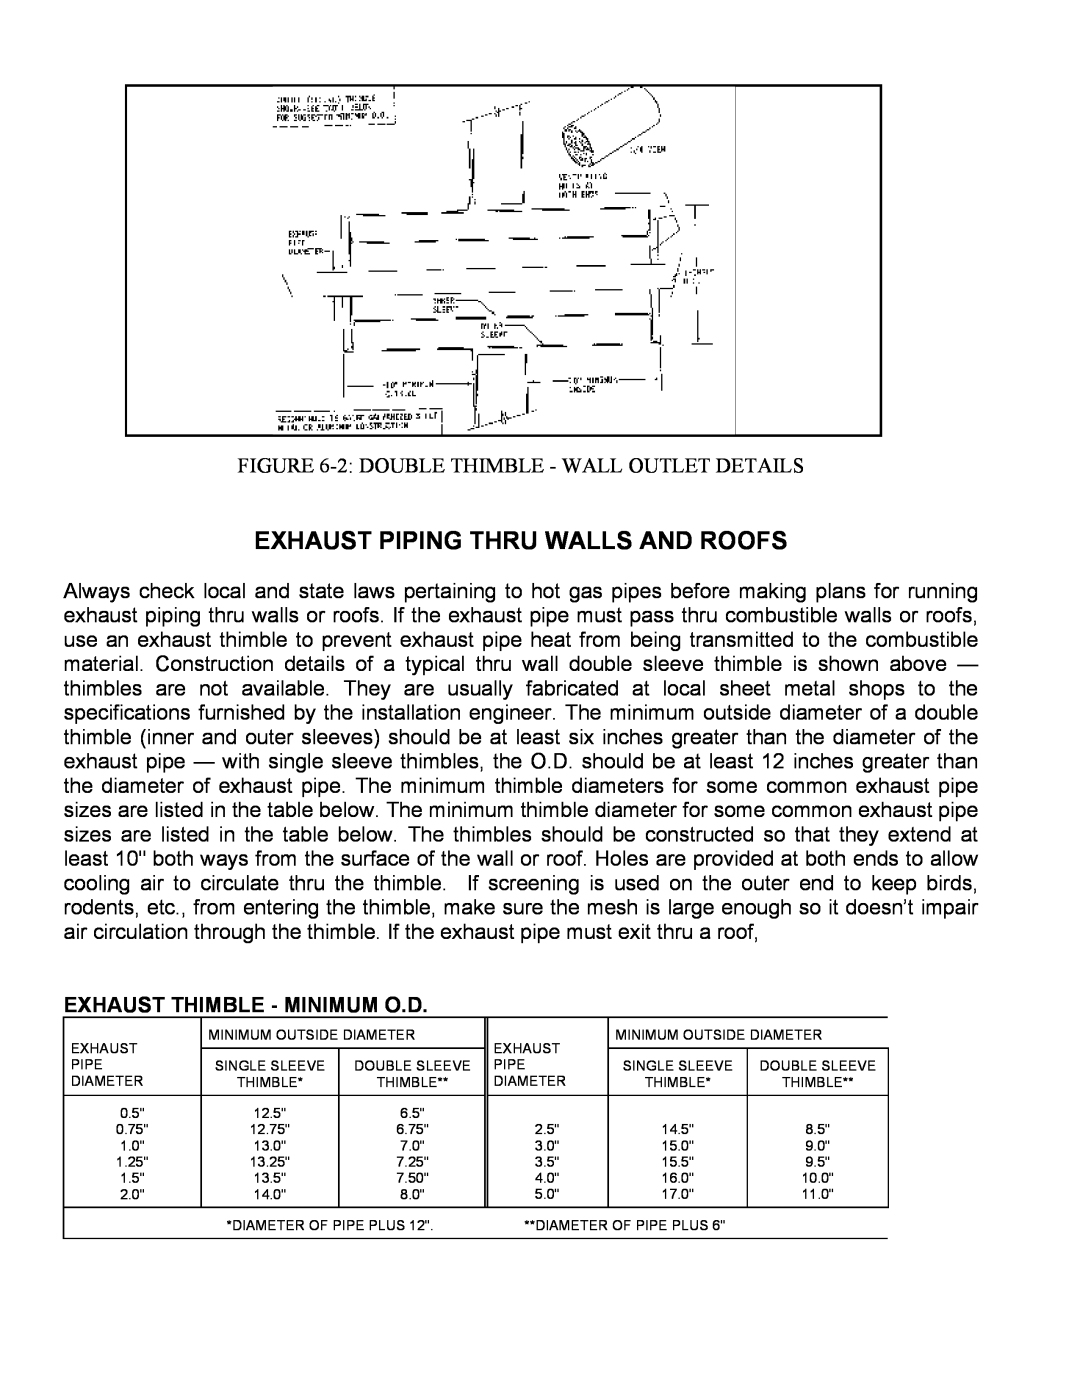 Baldor ISO9001 manual Exhaust Piping Thru Walls And Roofs, Exhaust Thimble - Minimum O.D 